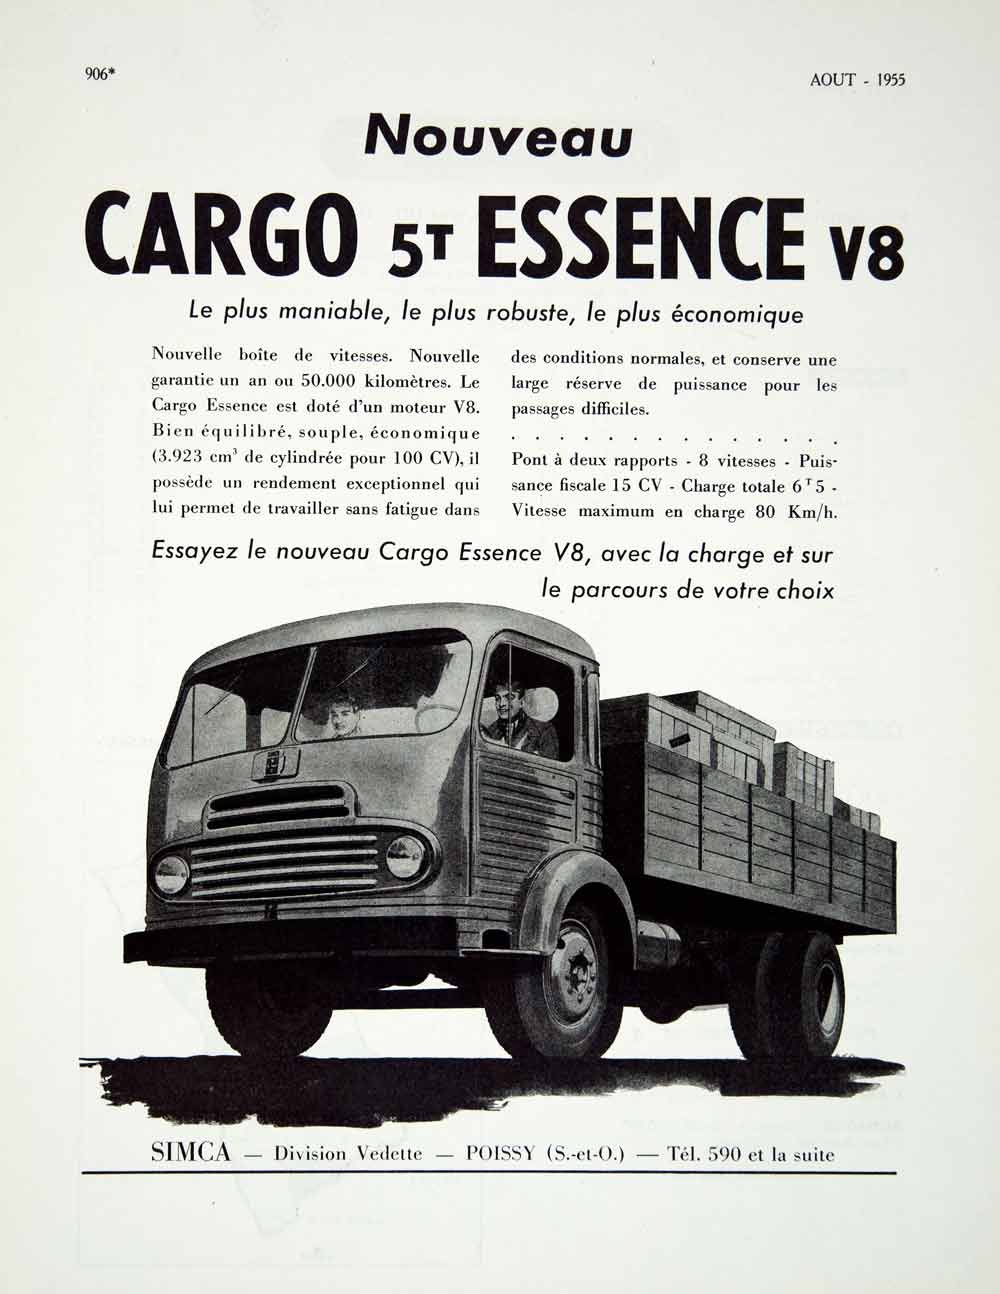 1955 Ad Vintage French Simca Cargo Essence Truck V8 Vehicle Poissy France VENA4